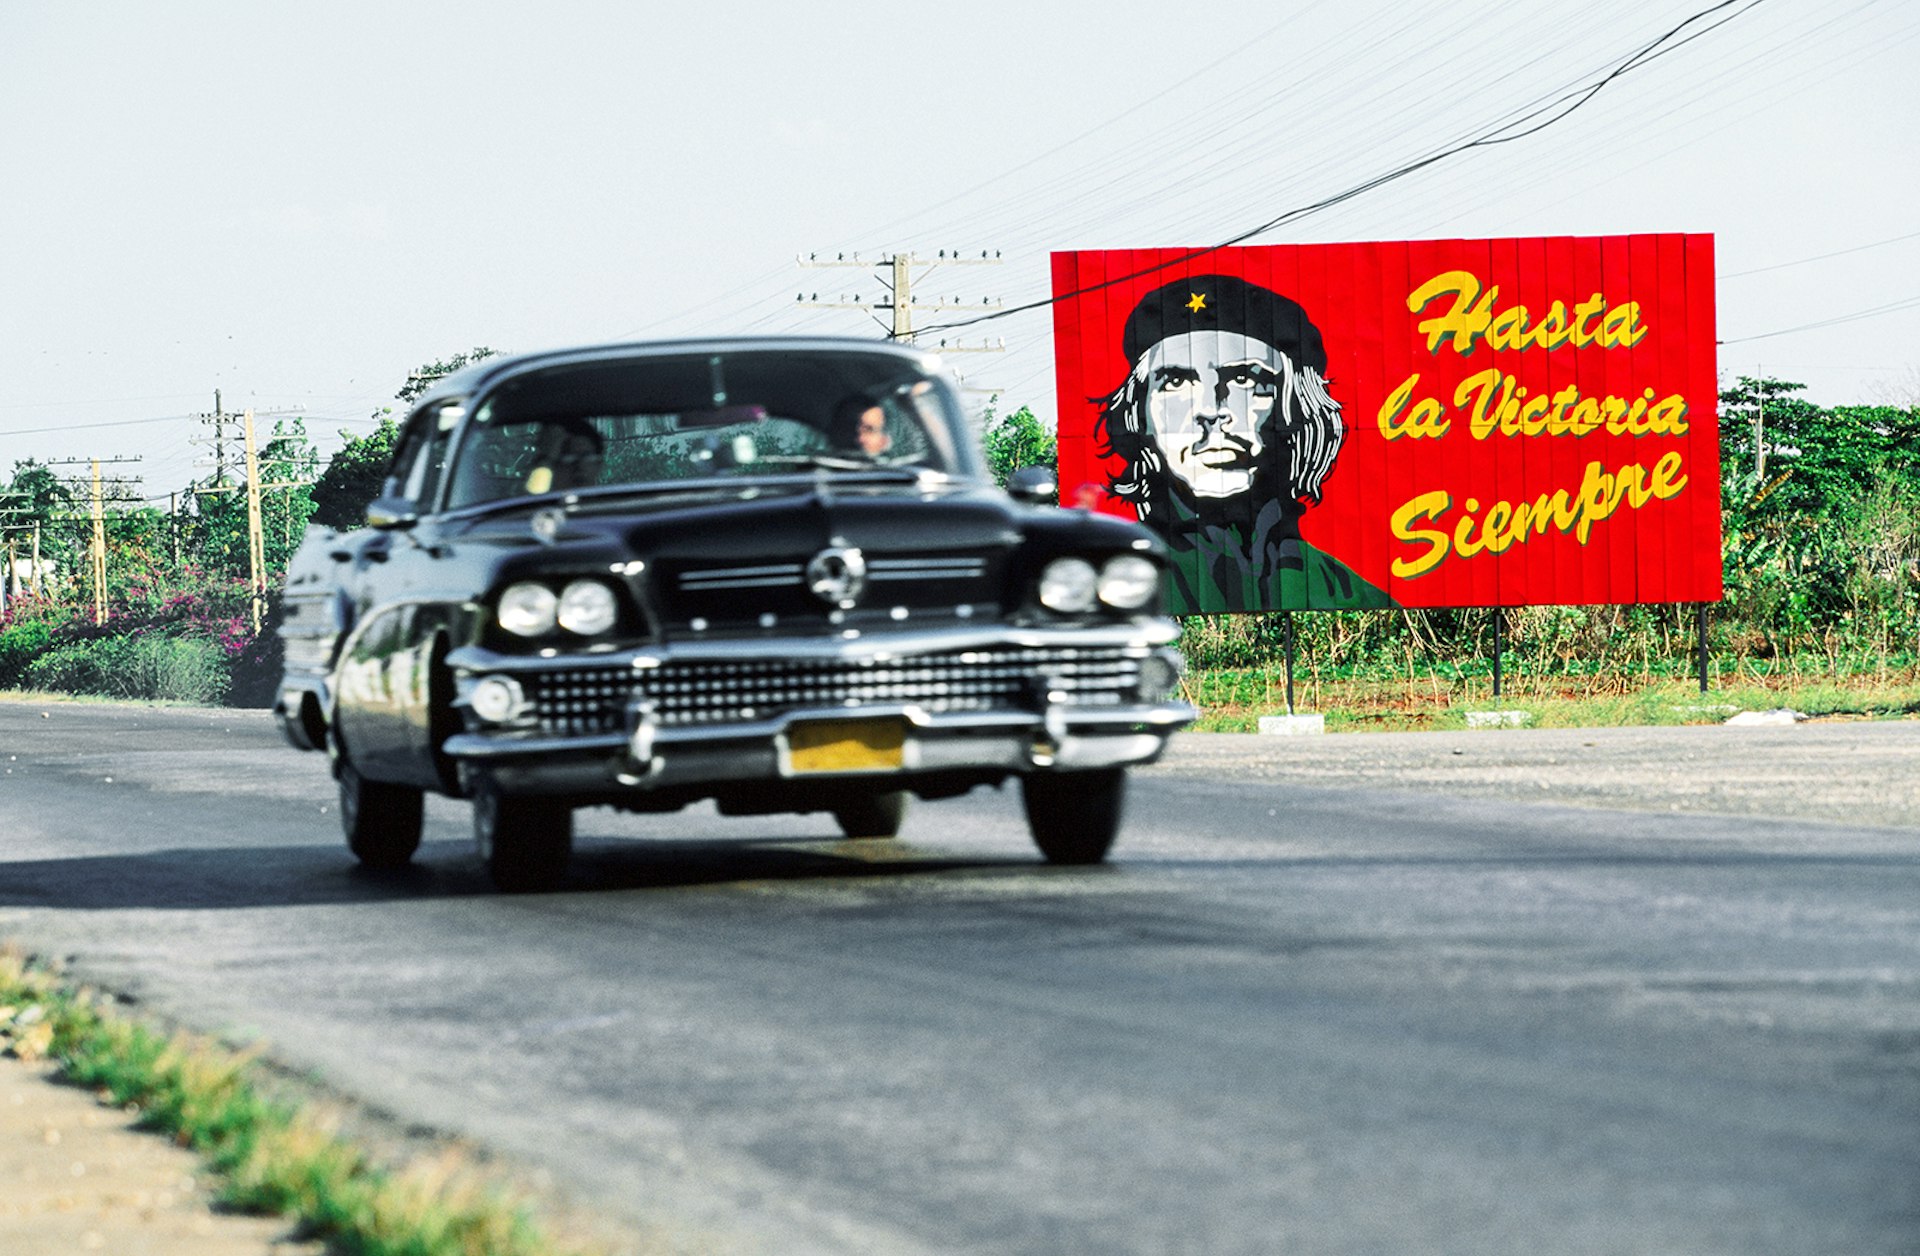 Features - 1958 Buick Century passing Che Guevara billboard.